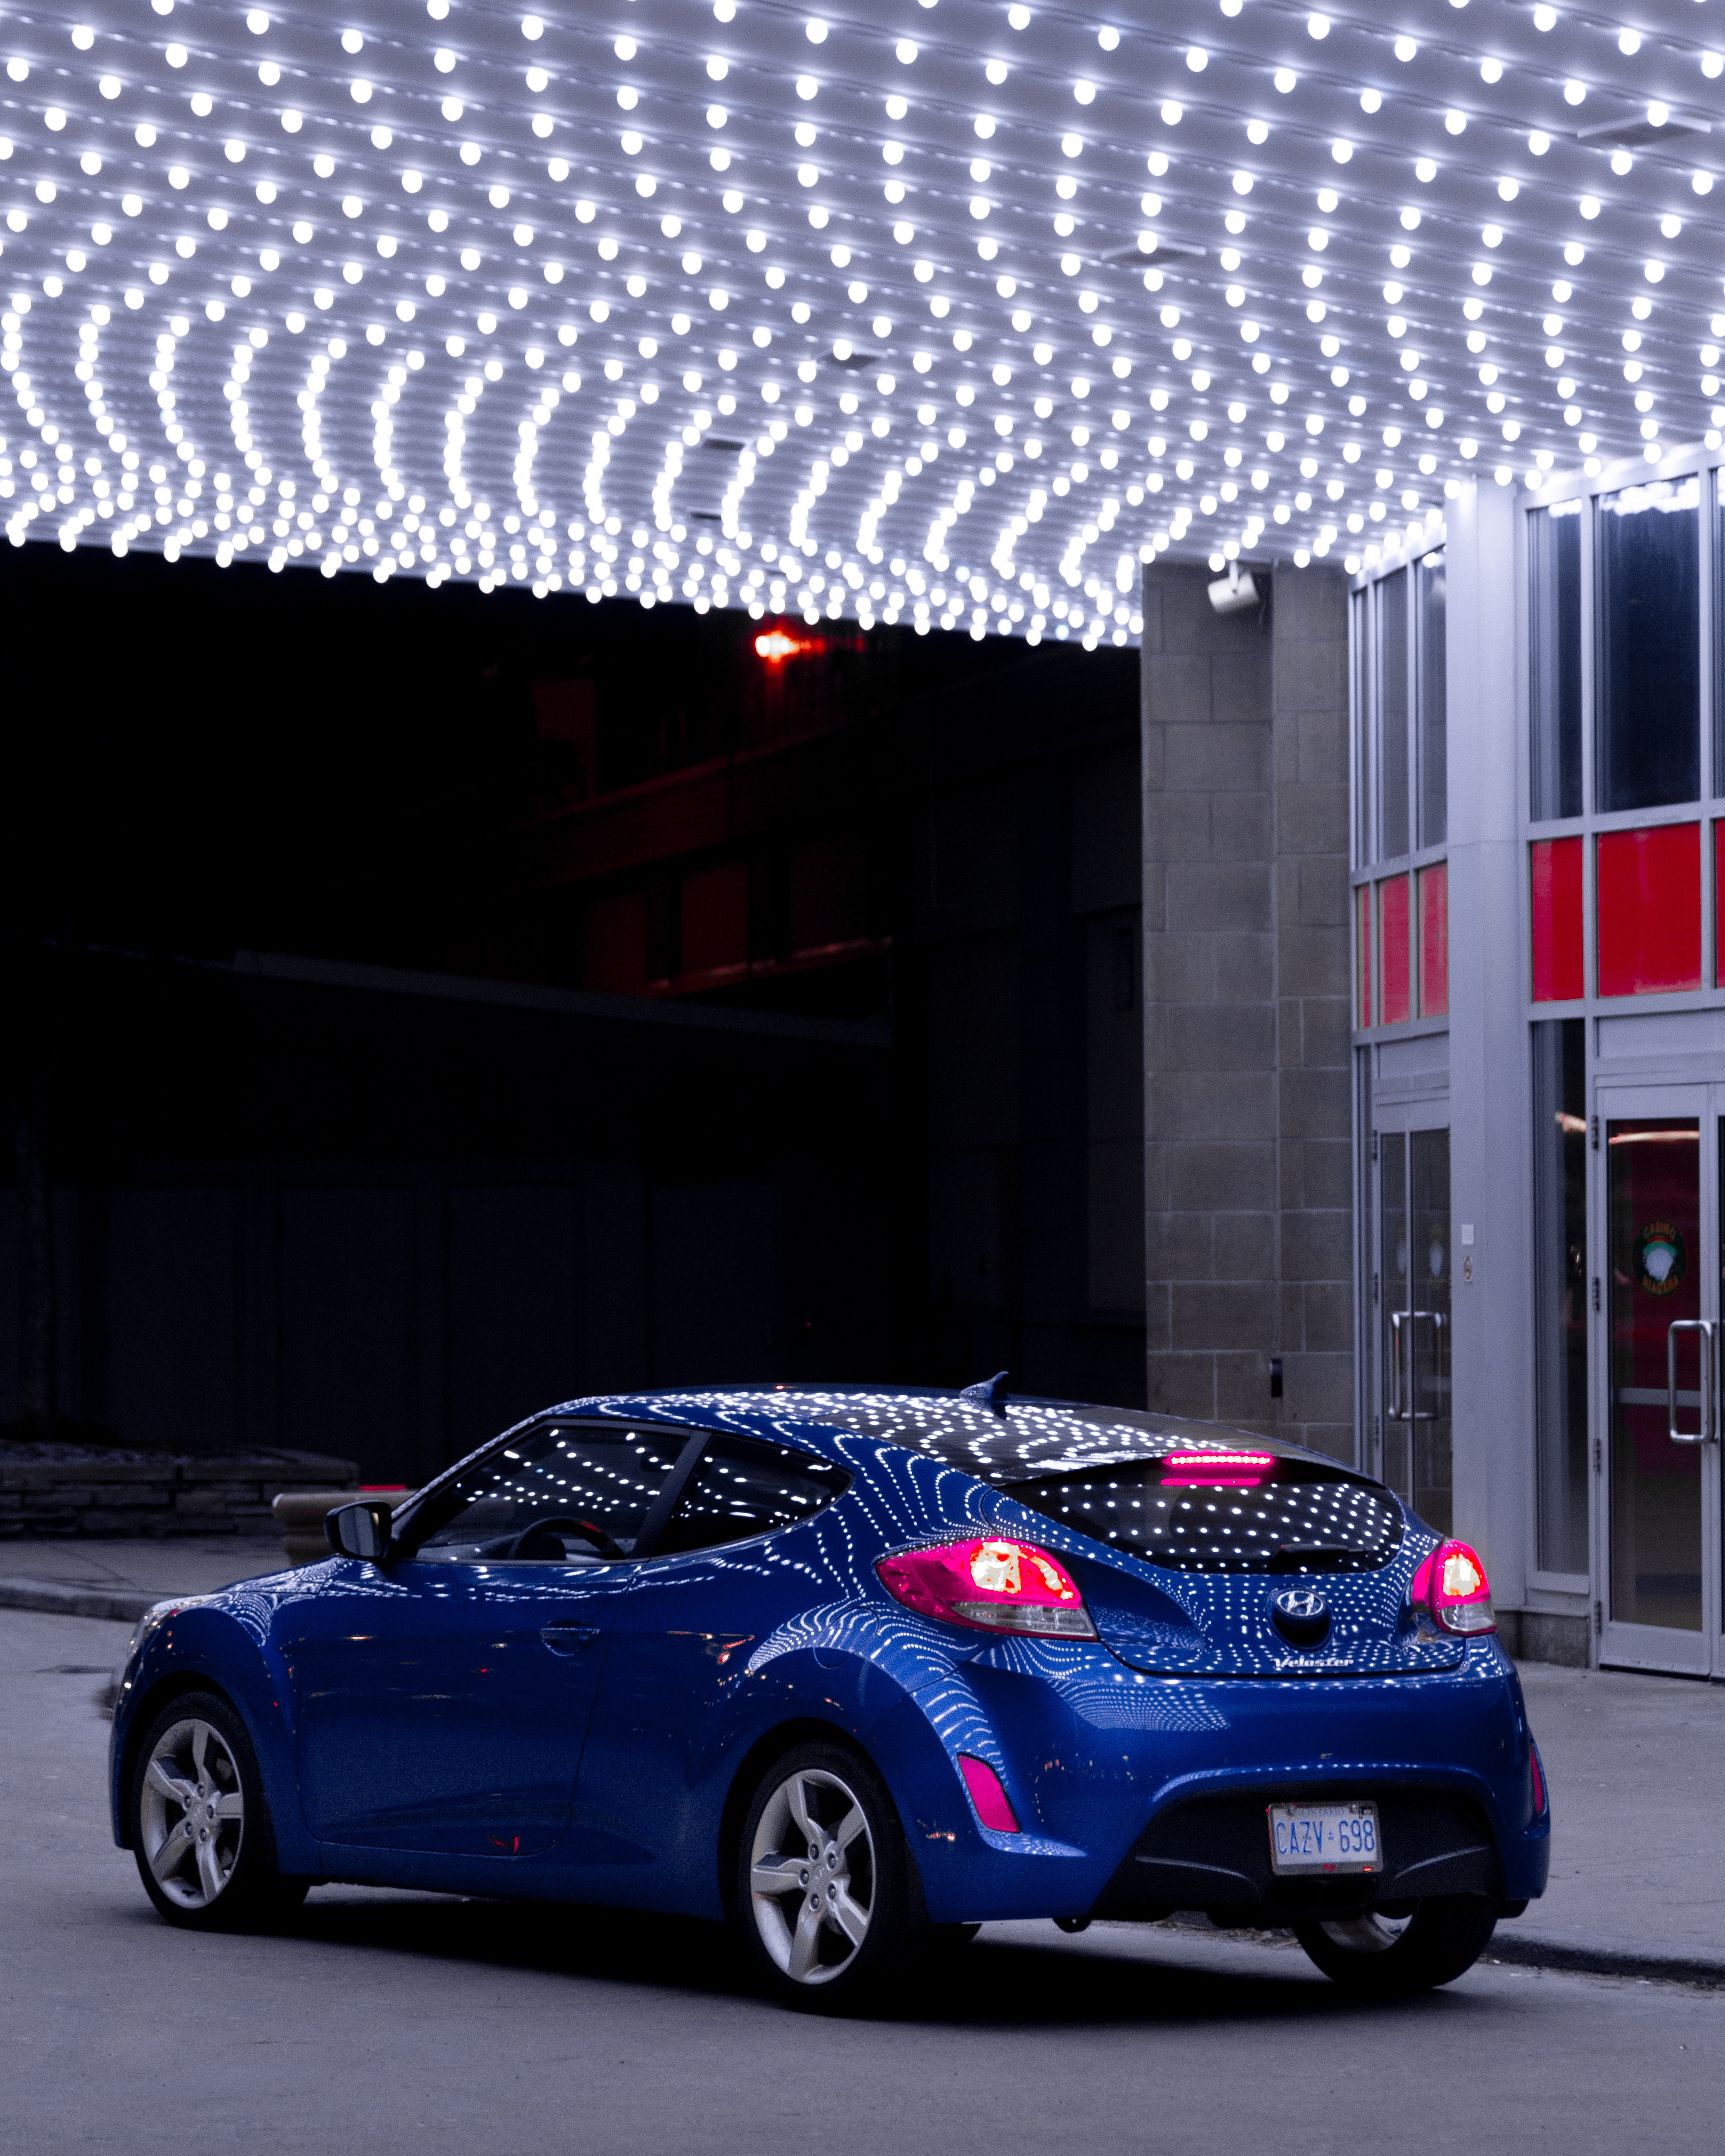 android shine, hyundai, cars, blue, light, side view, street